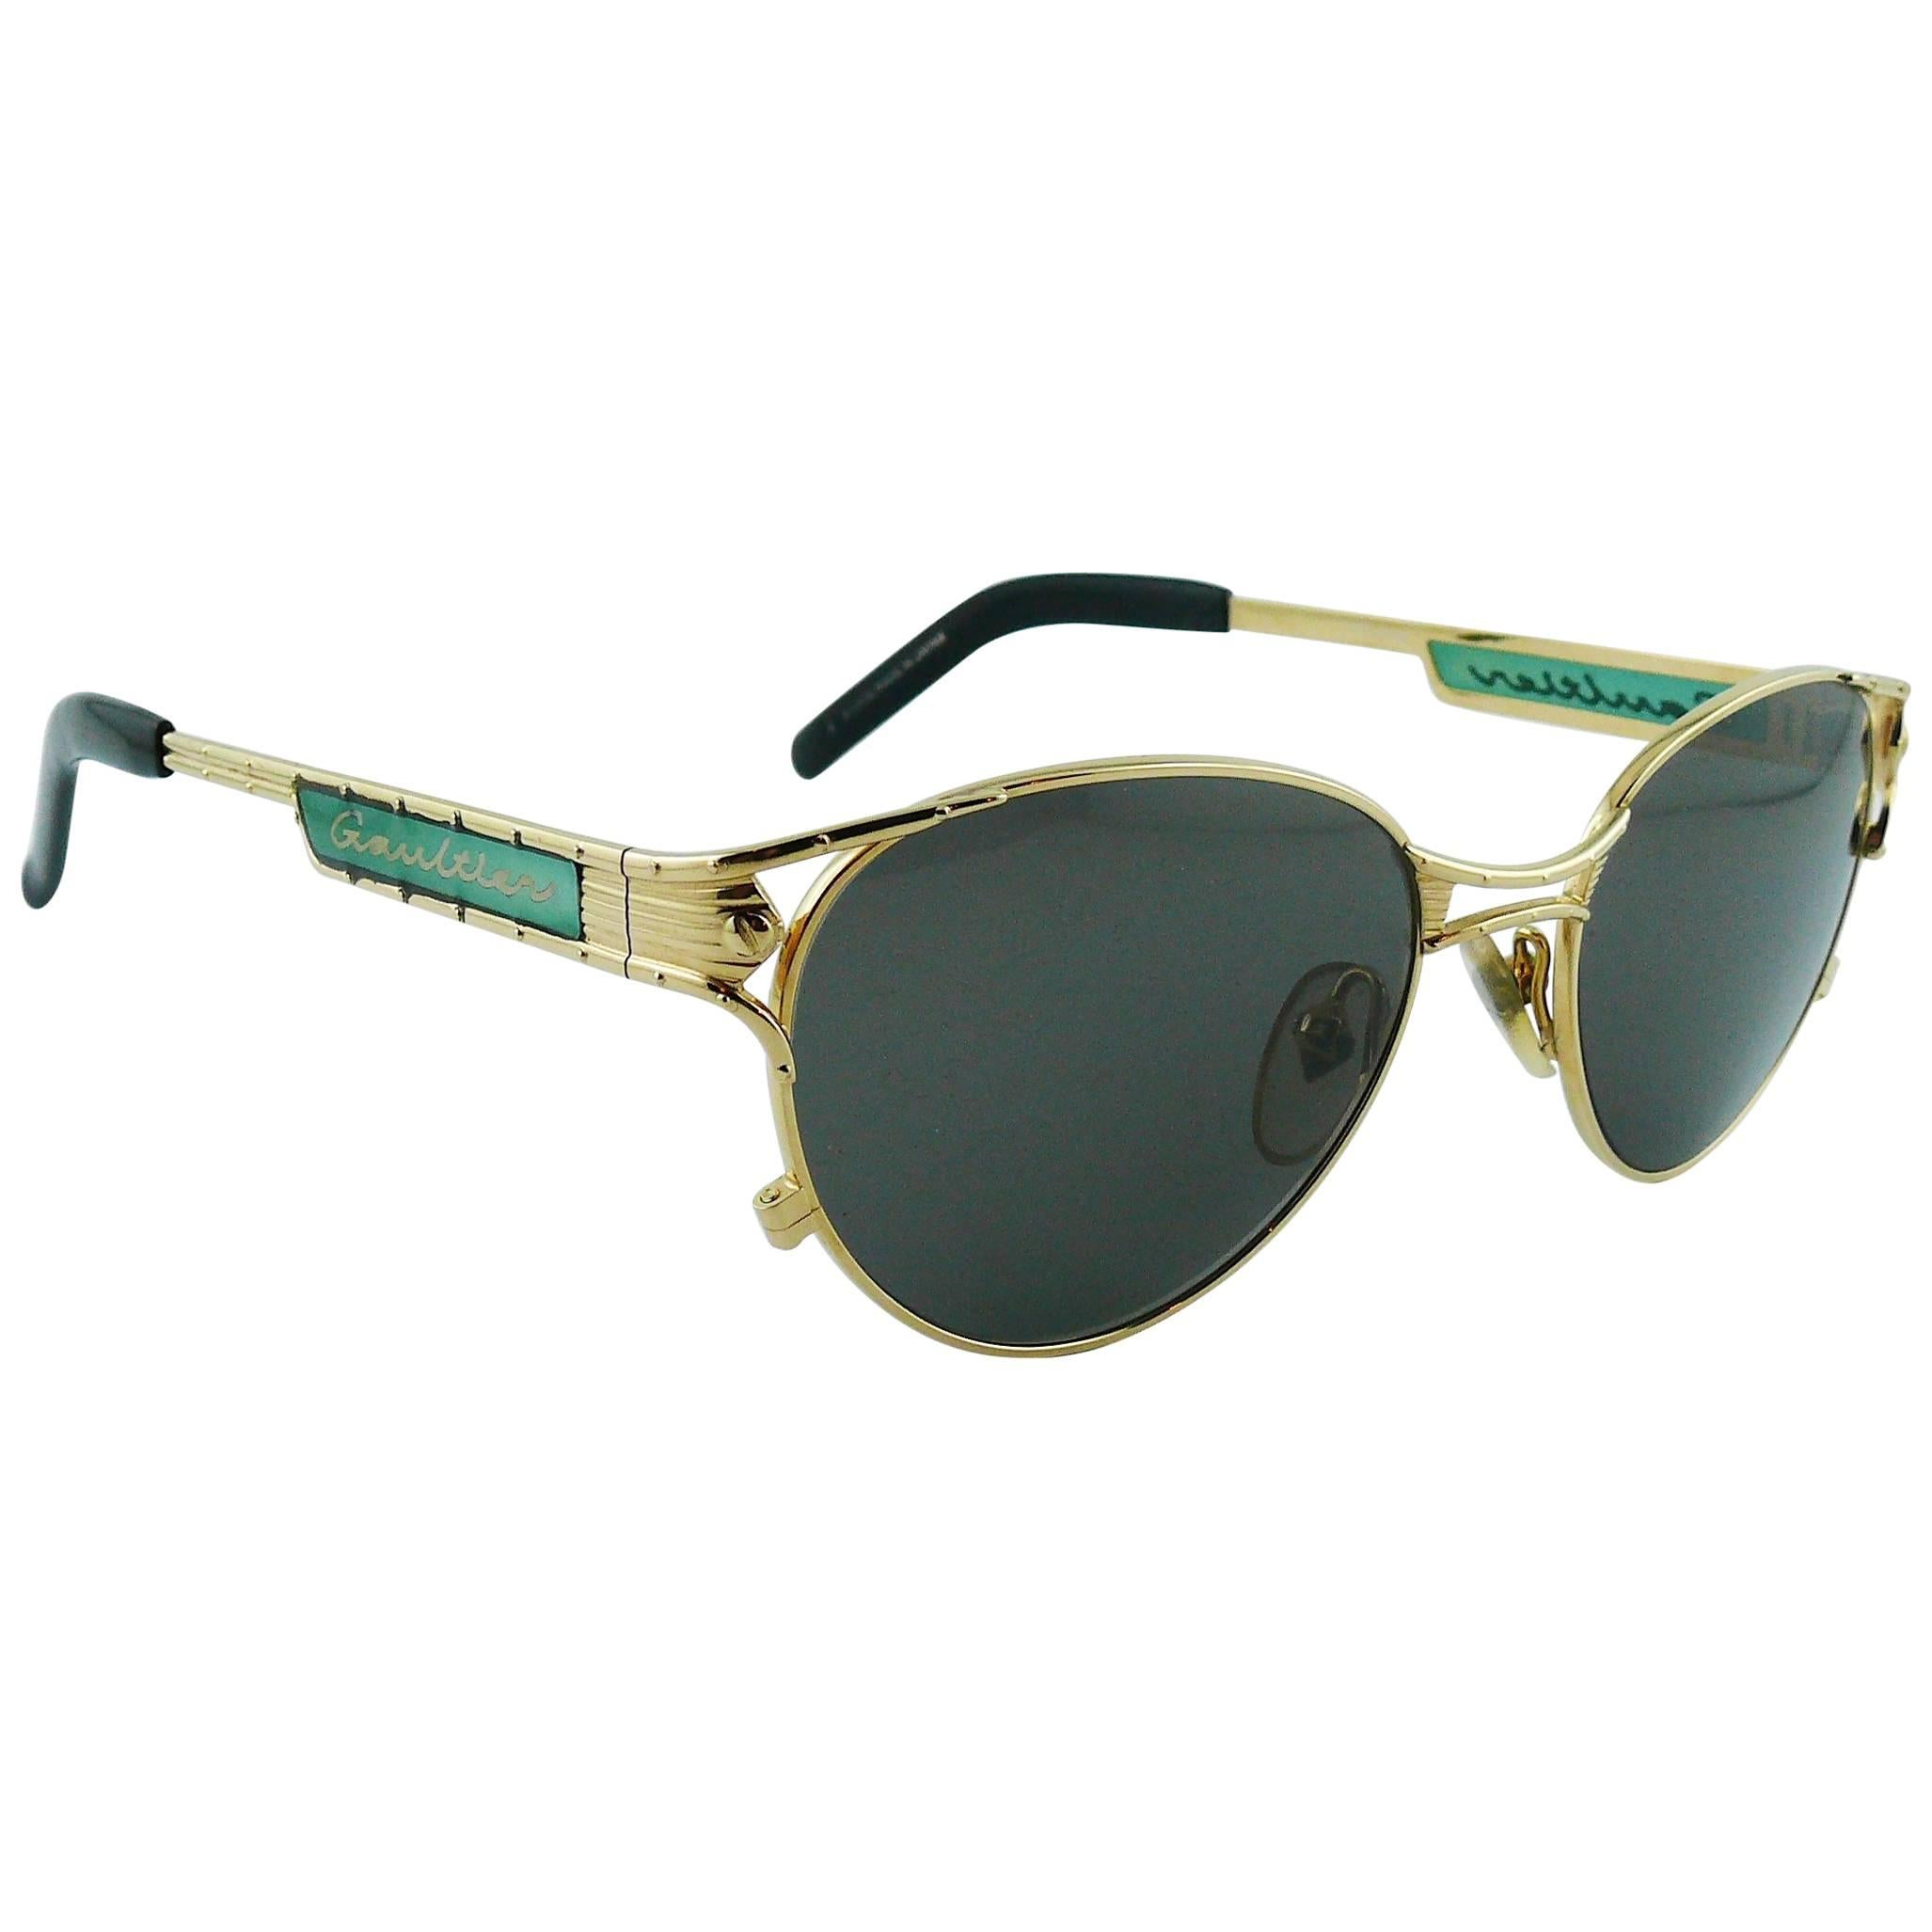 Jean Paul Gaultier Vintage 1990s Sunglasses Model 56-4179